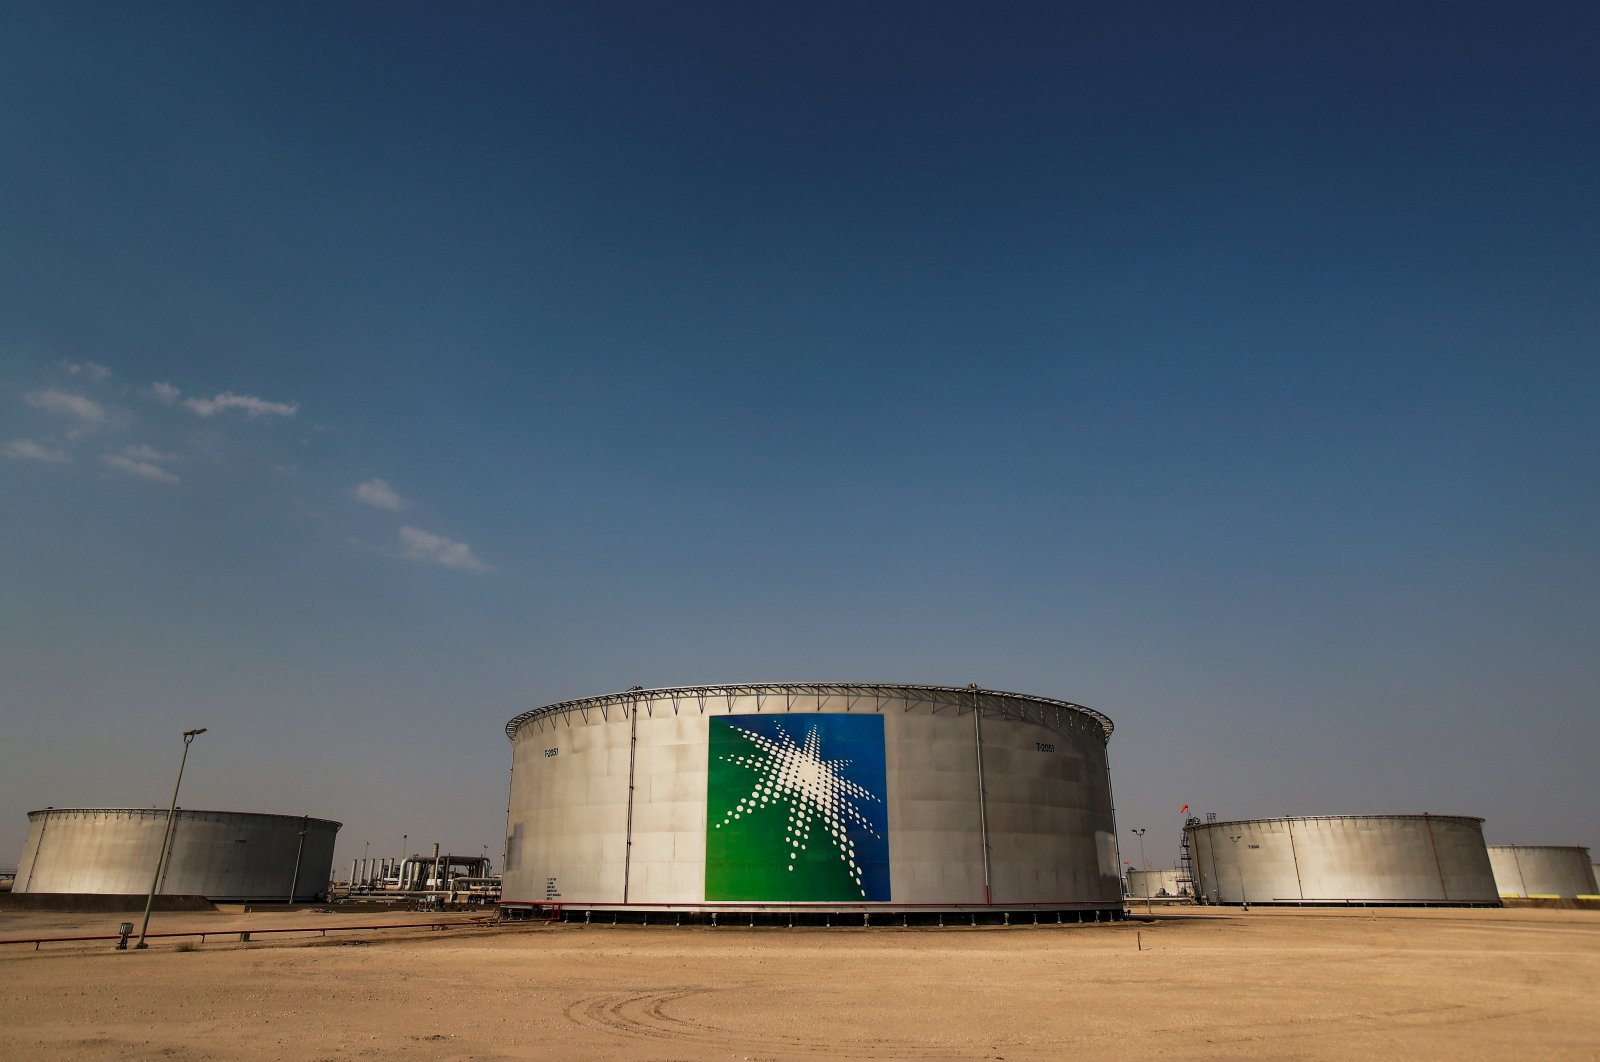 A view shows branded oil tanks at Saudi Aramco oil facility in Abqaiq, Saudi Arabia, Oct. 12, 2019. (Reuters Photo)